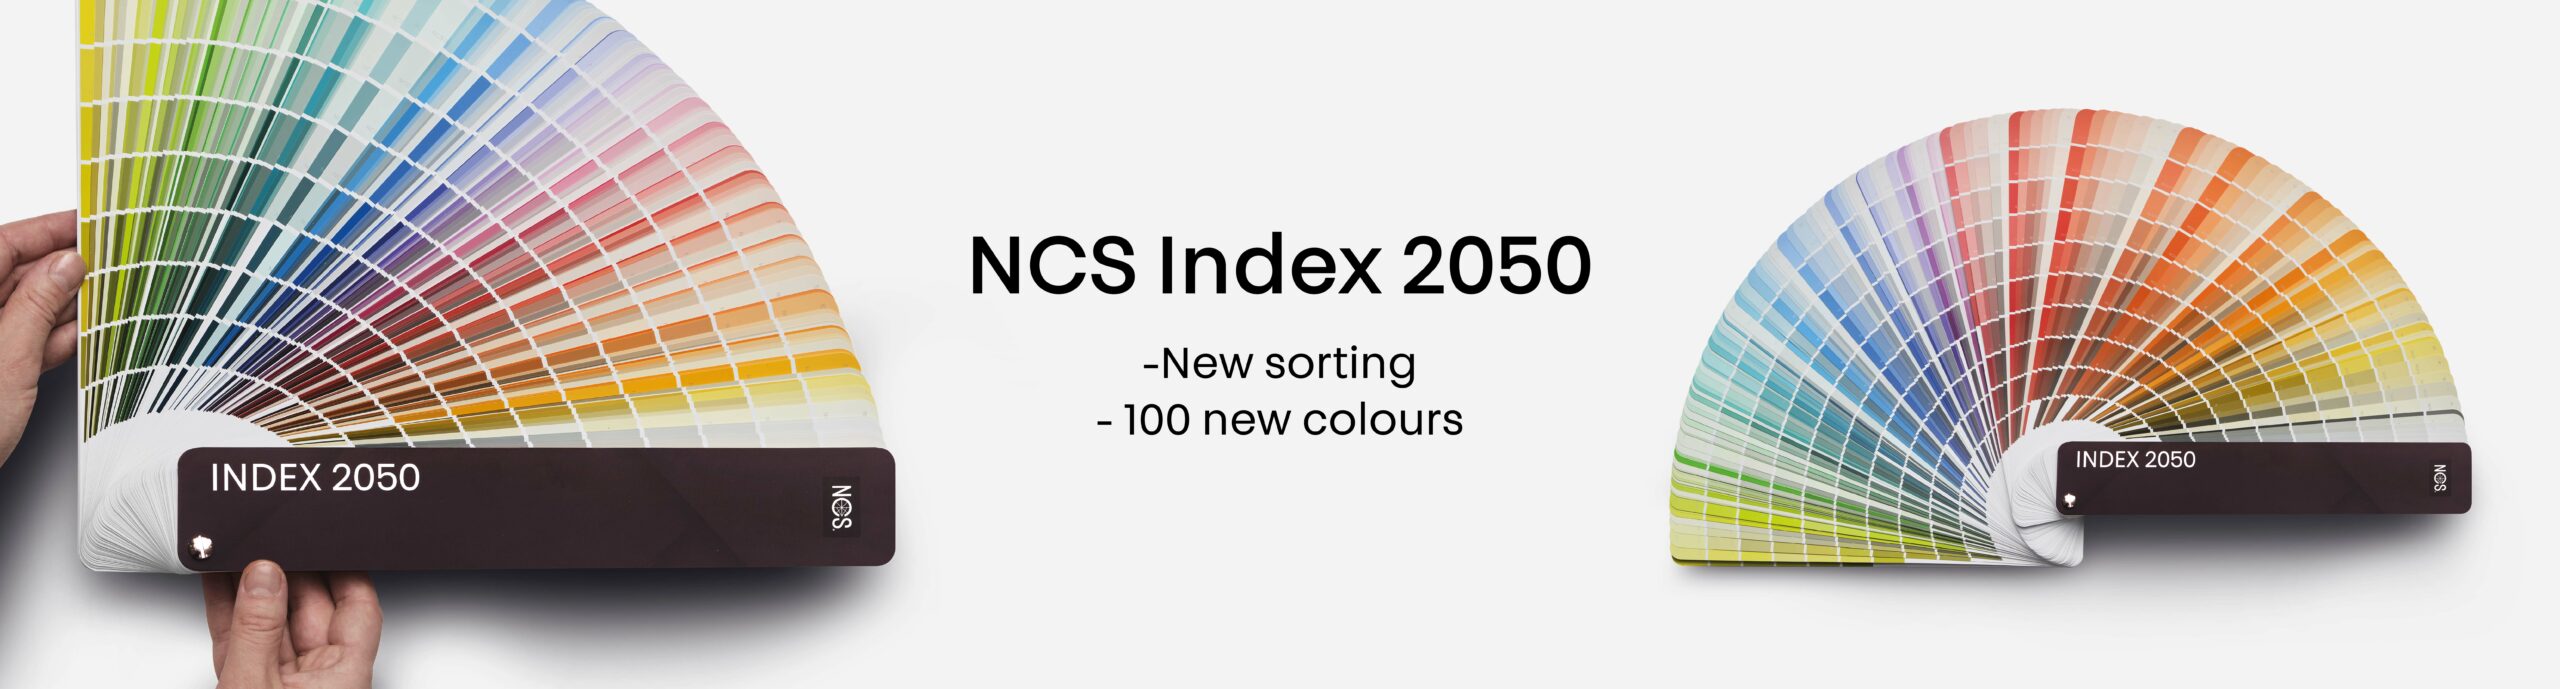 NCS Index 2050